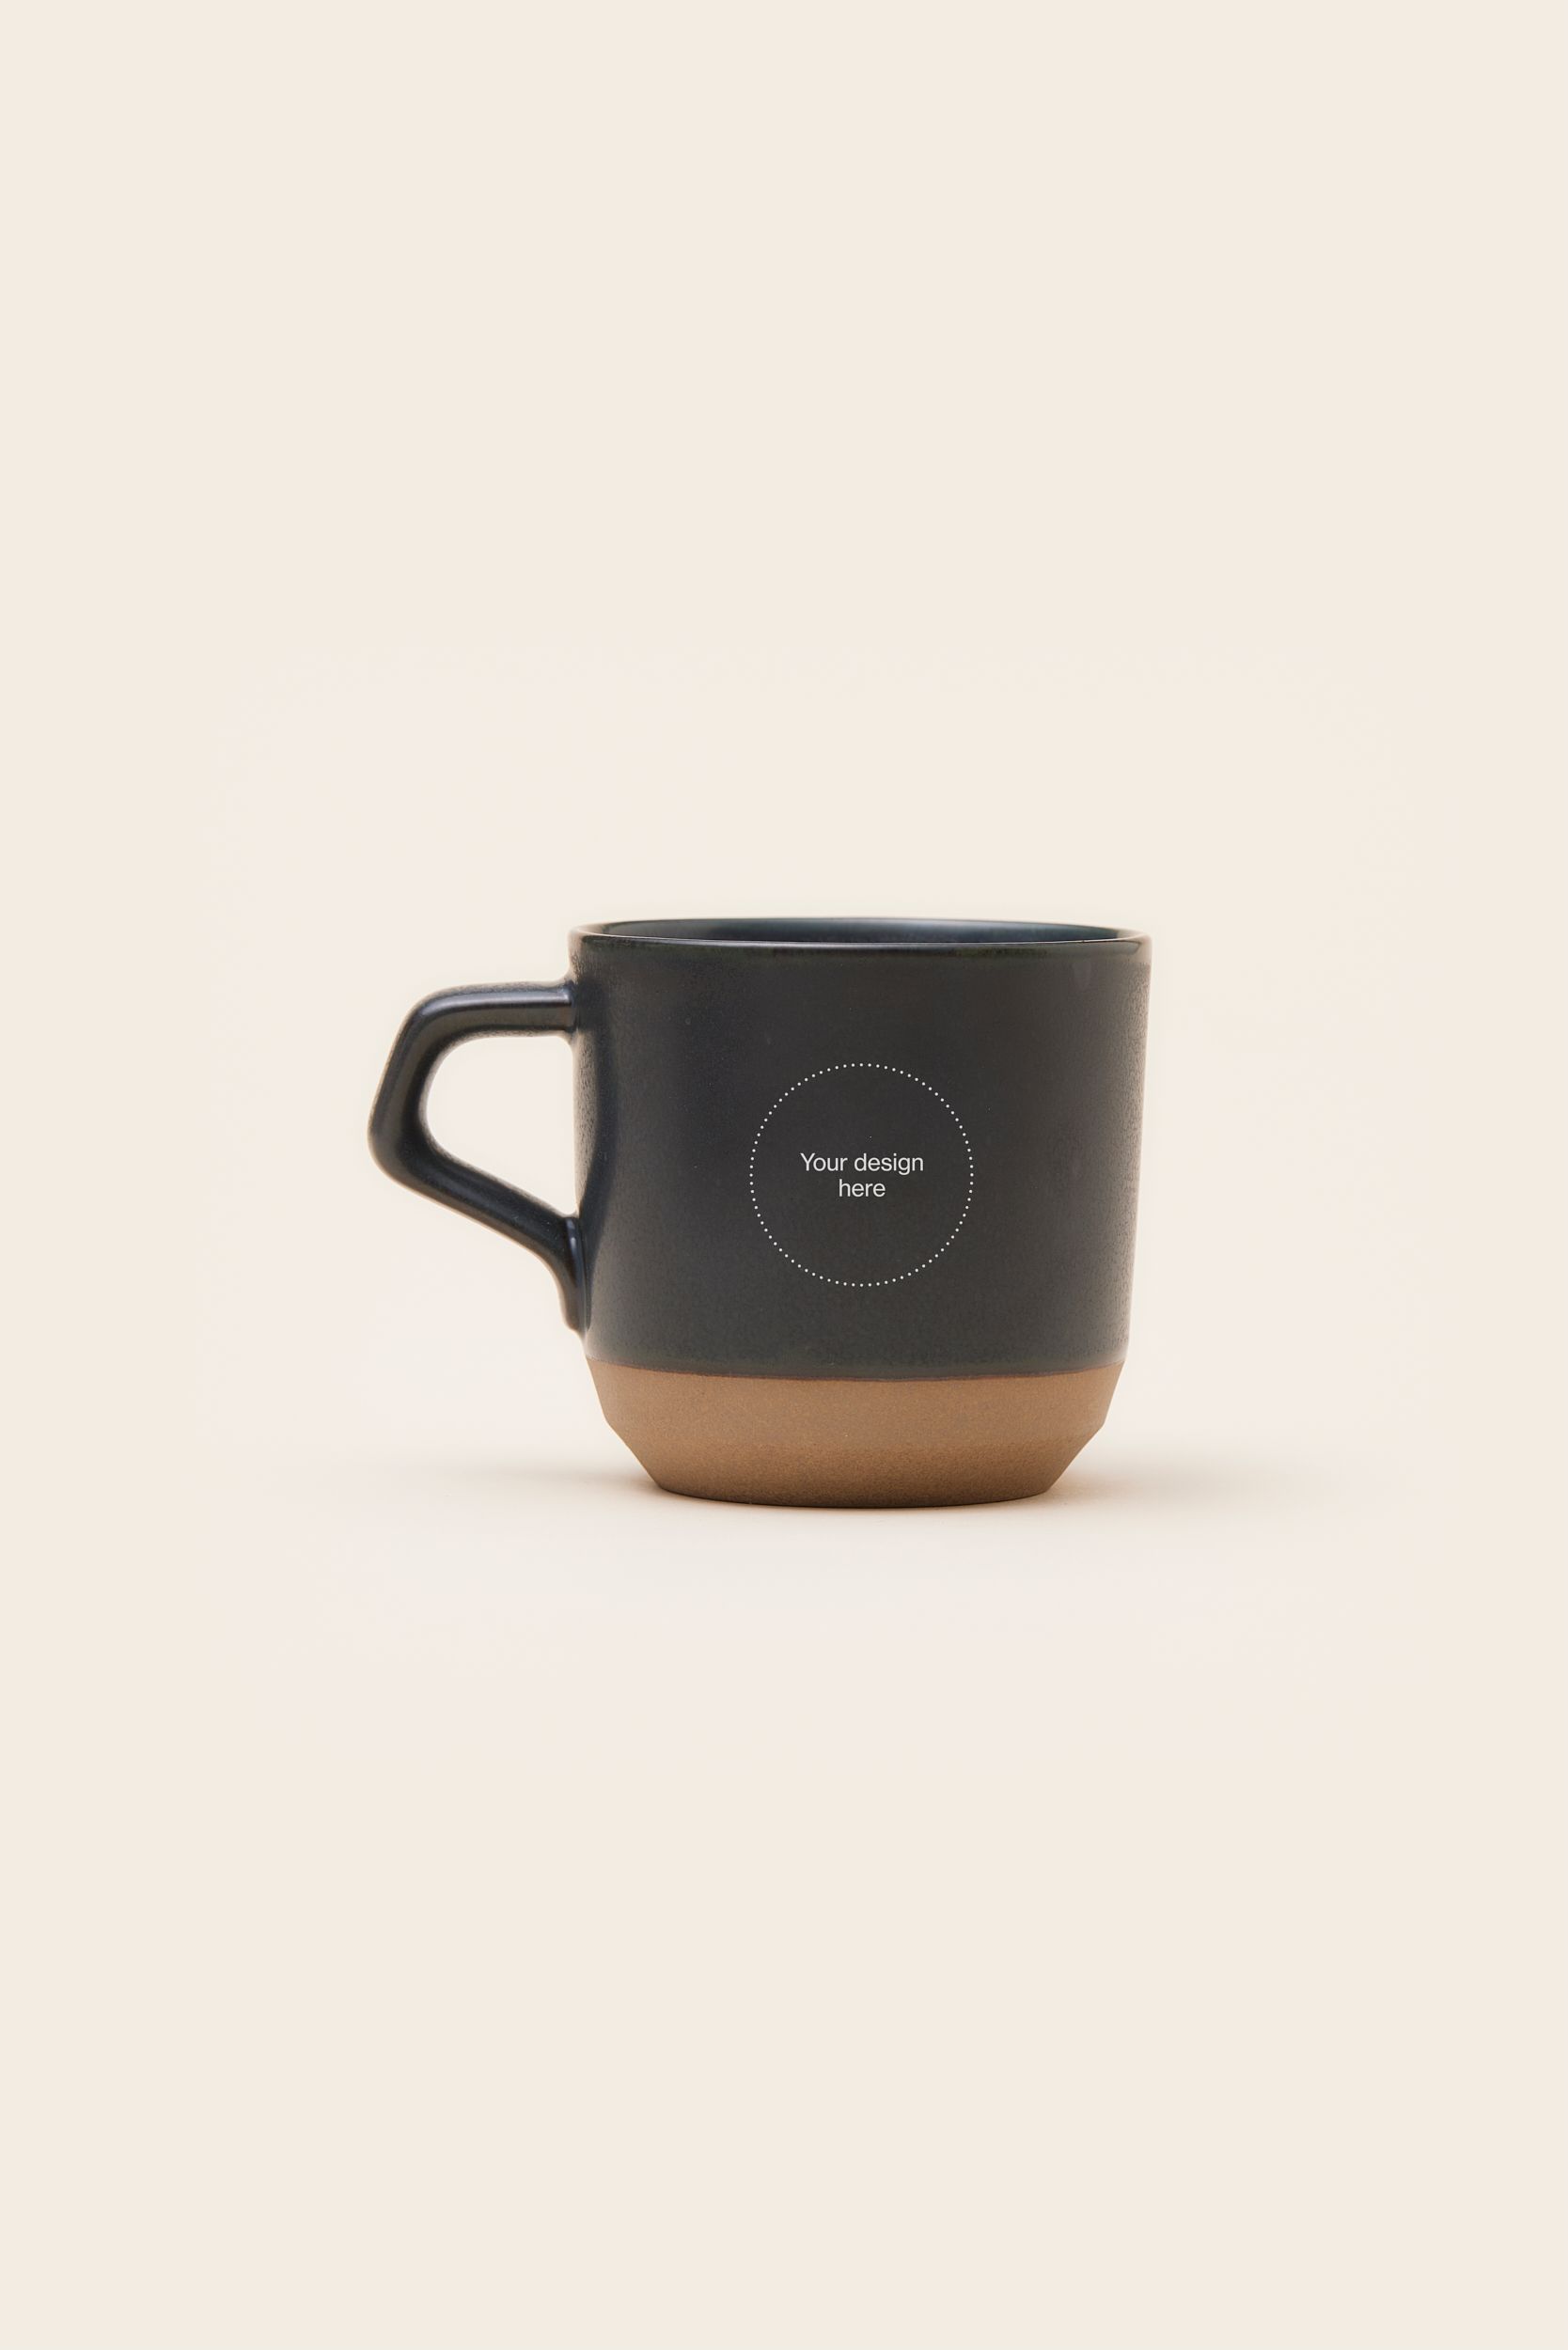 MERCHERY_Kinto ceramic mug_0.3L_black_front+logo.jpg